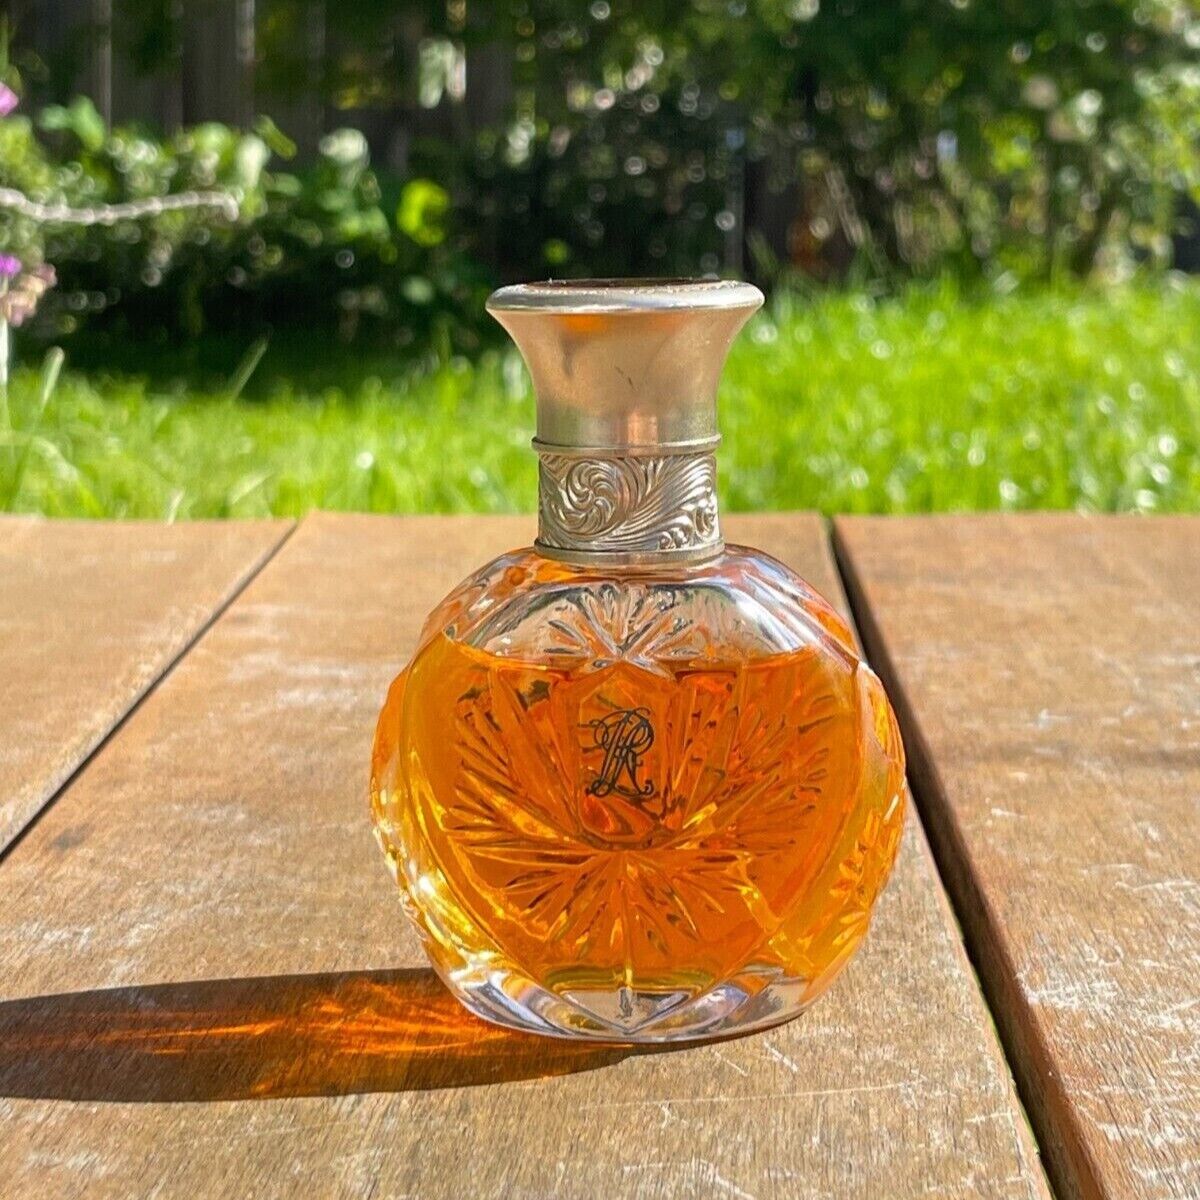 DISCONTINUED 1989 Ralph Lauren Safari Perfume 1.7 oz / 50 ml Eau de Parfum Spray